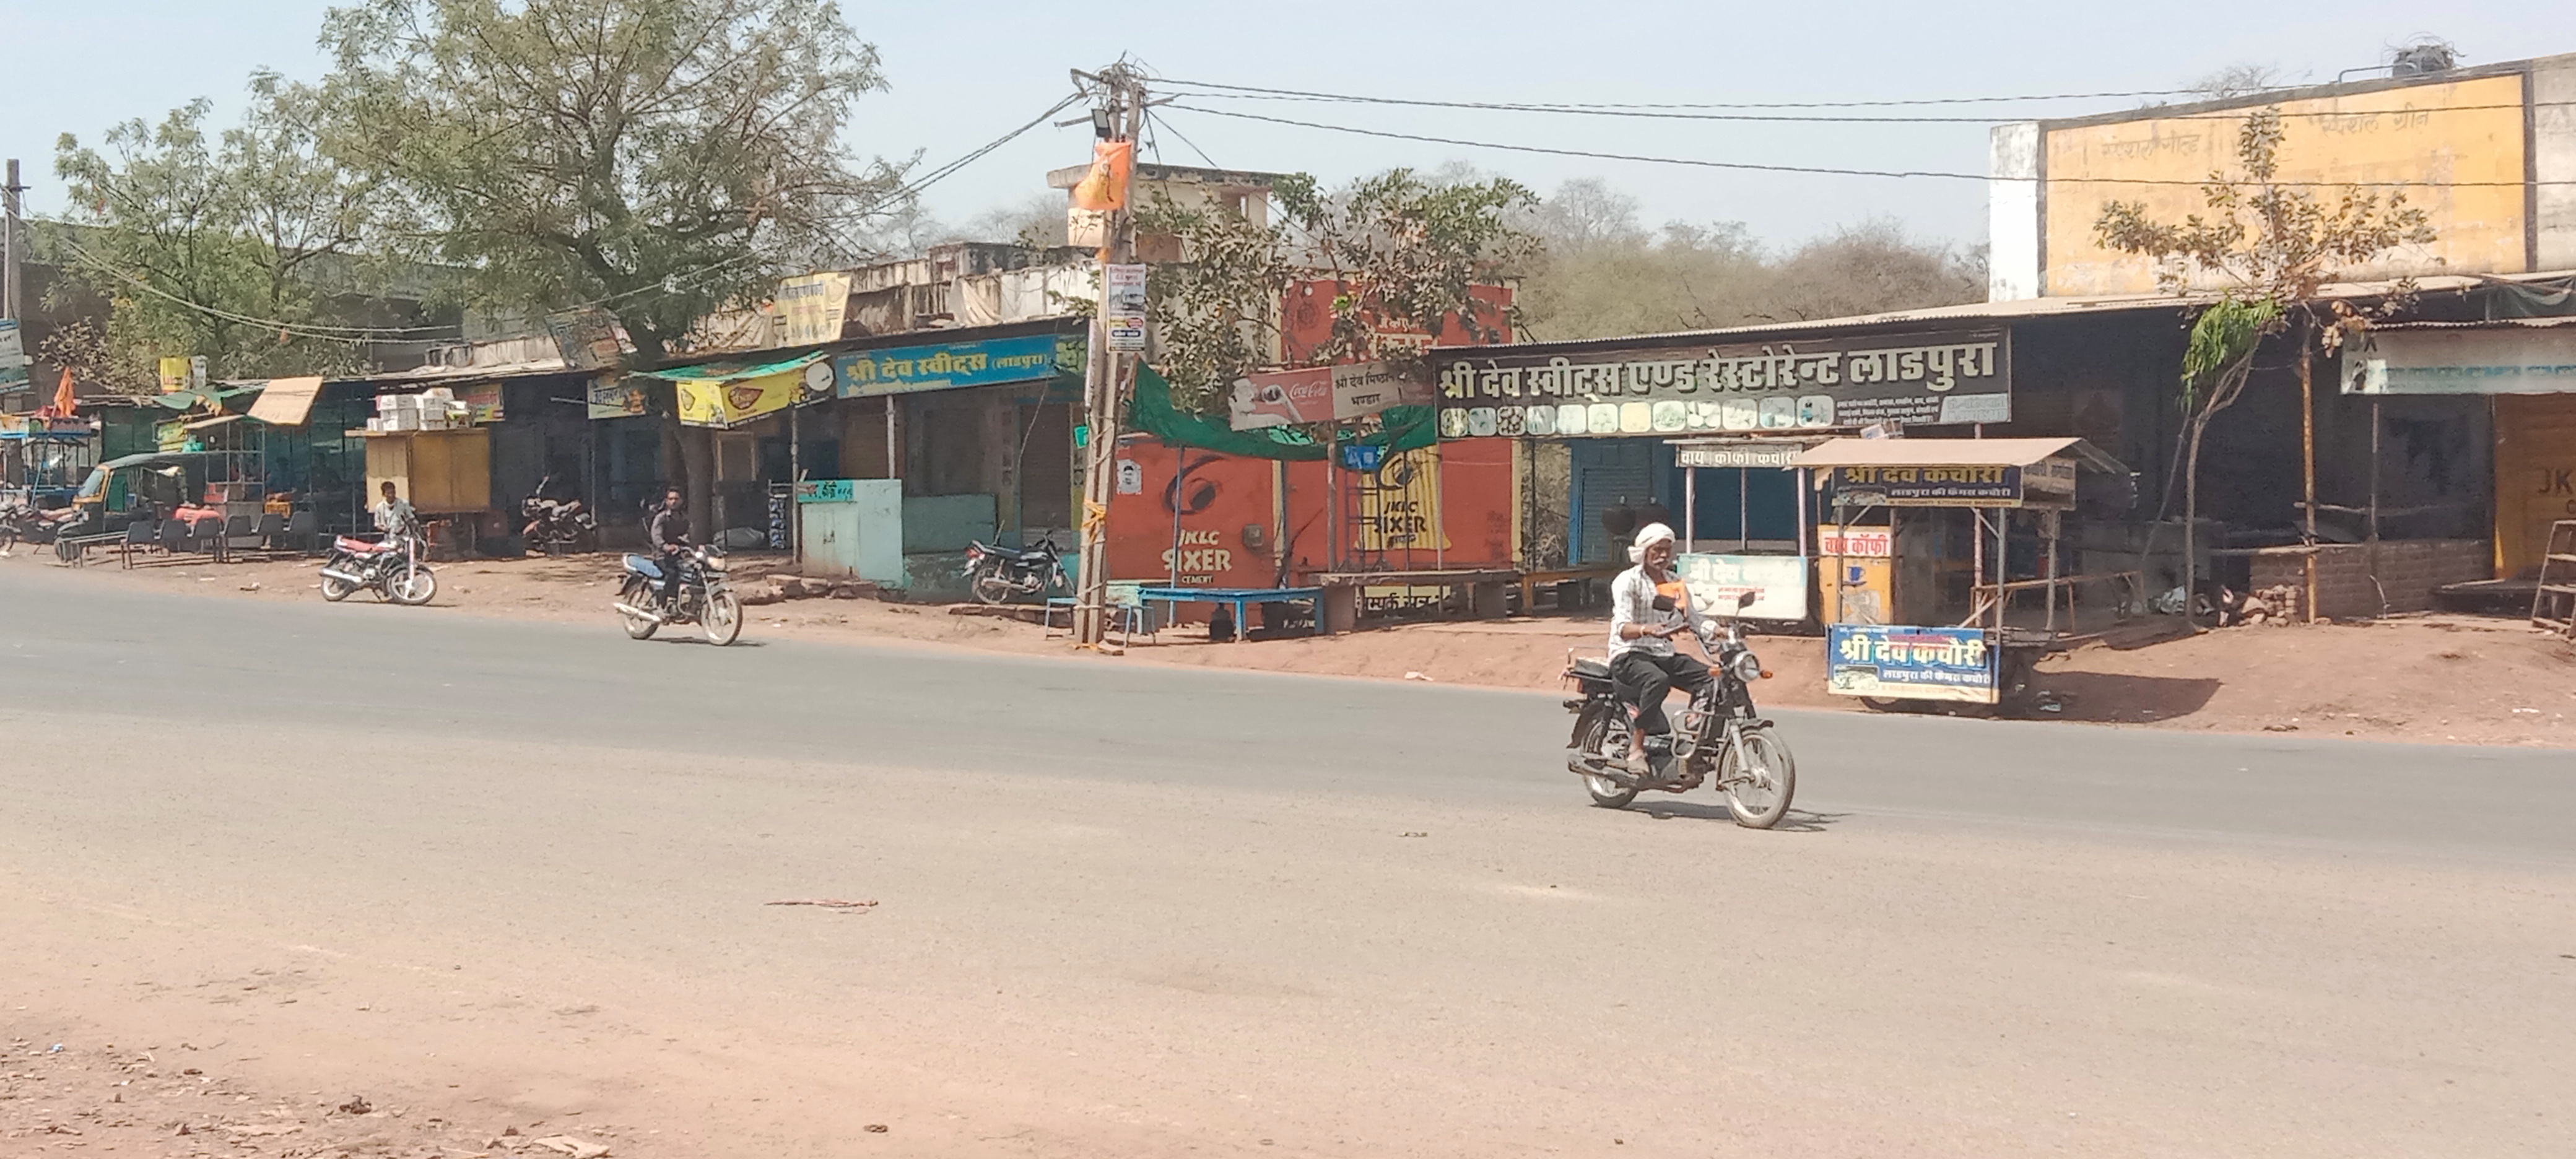 market closed Ladpura town in bhilwara